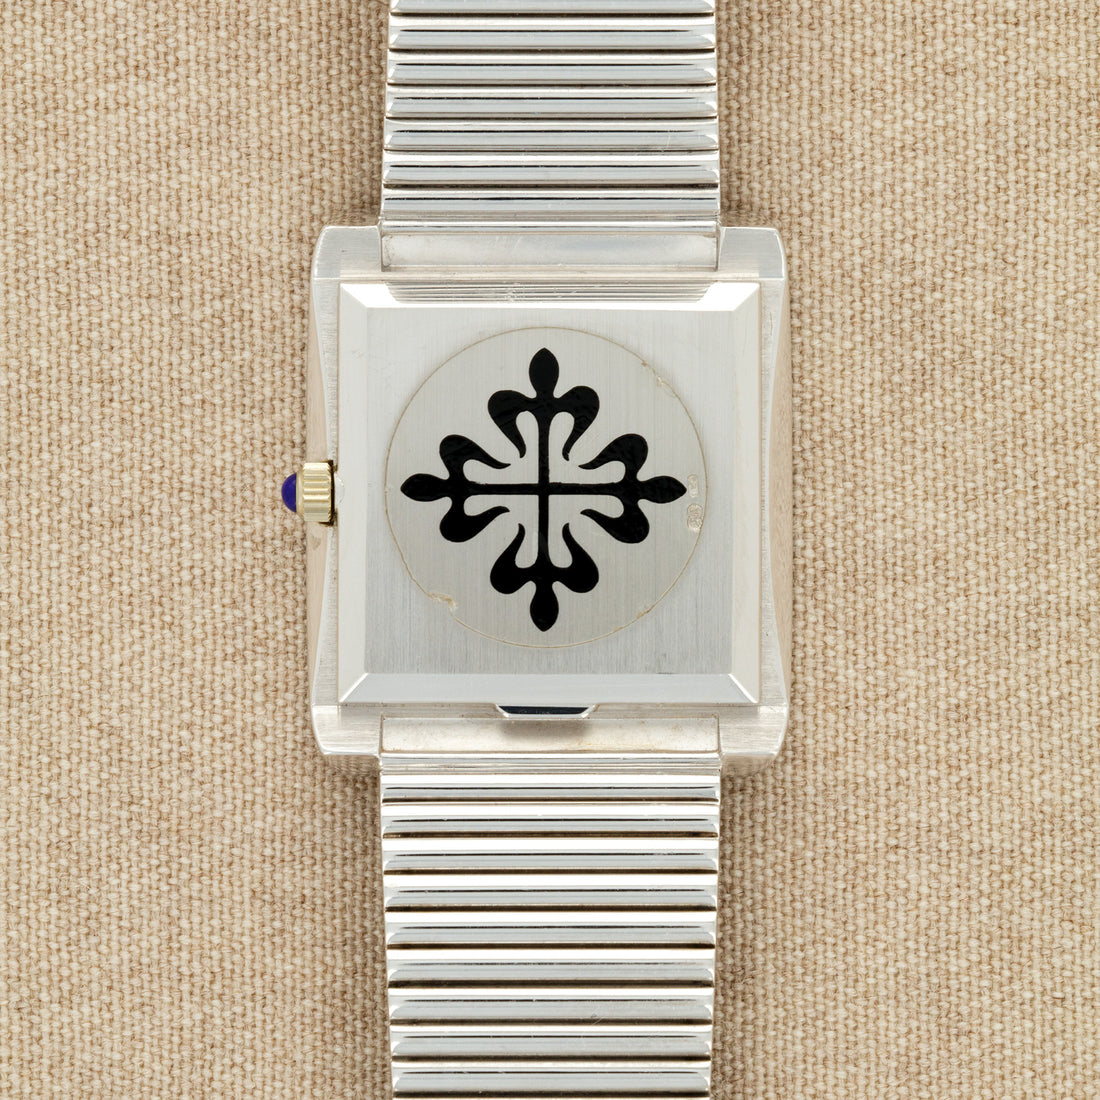 Patek Philippe White Gold Lapis Watch Ref. 3733